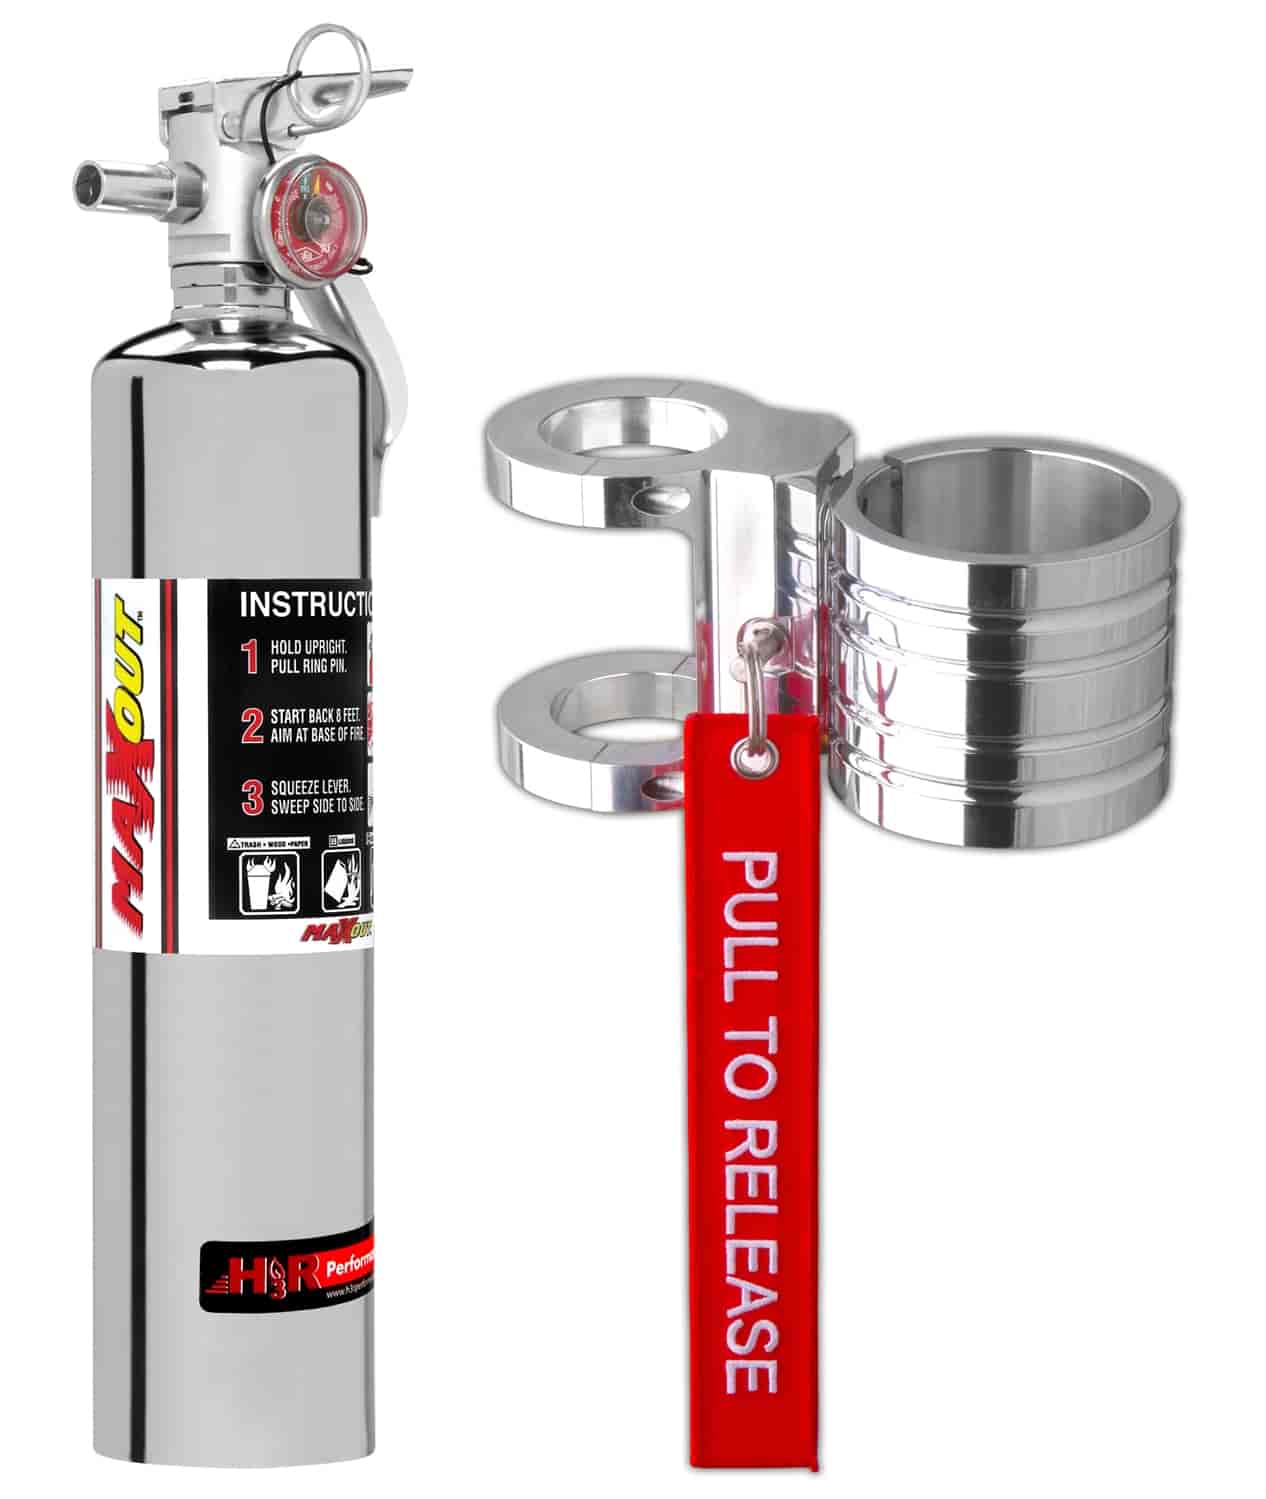 MaxOut Dry Chemical Fire Extinguisher Kit Chrome 2.5-lb bottle